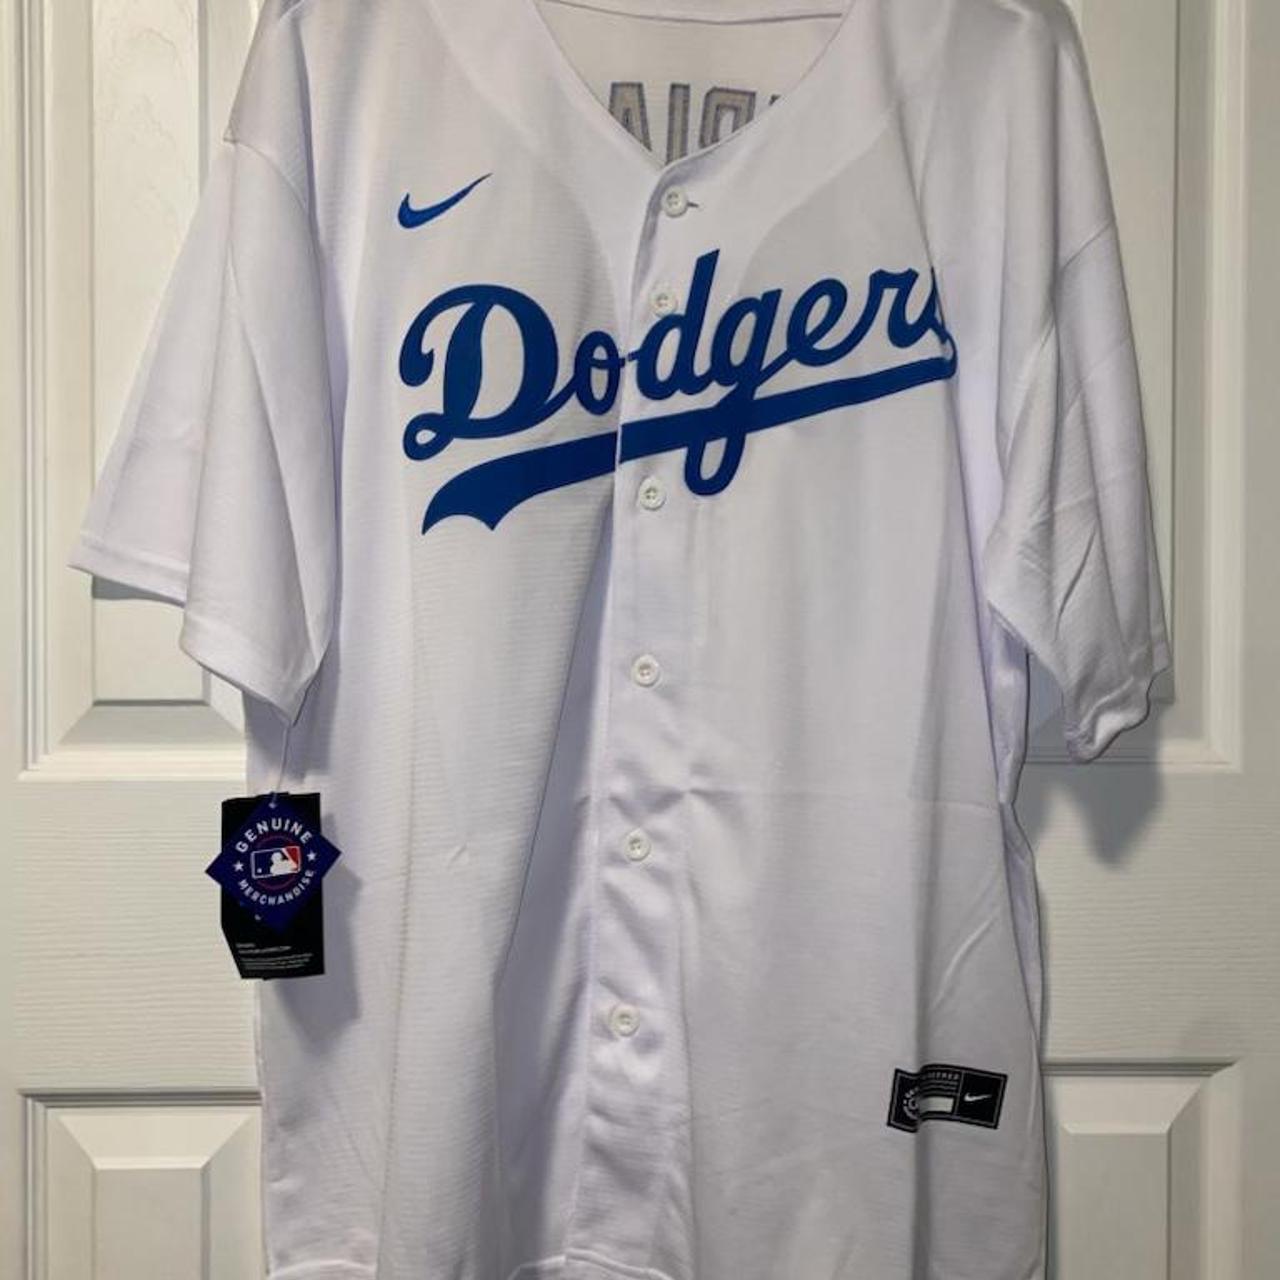 Dodgers white Urias jersey